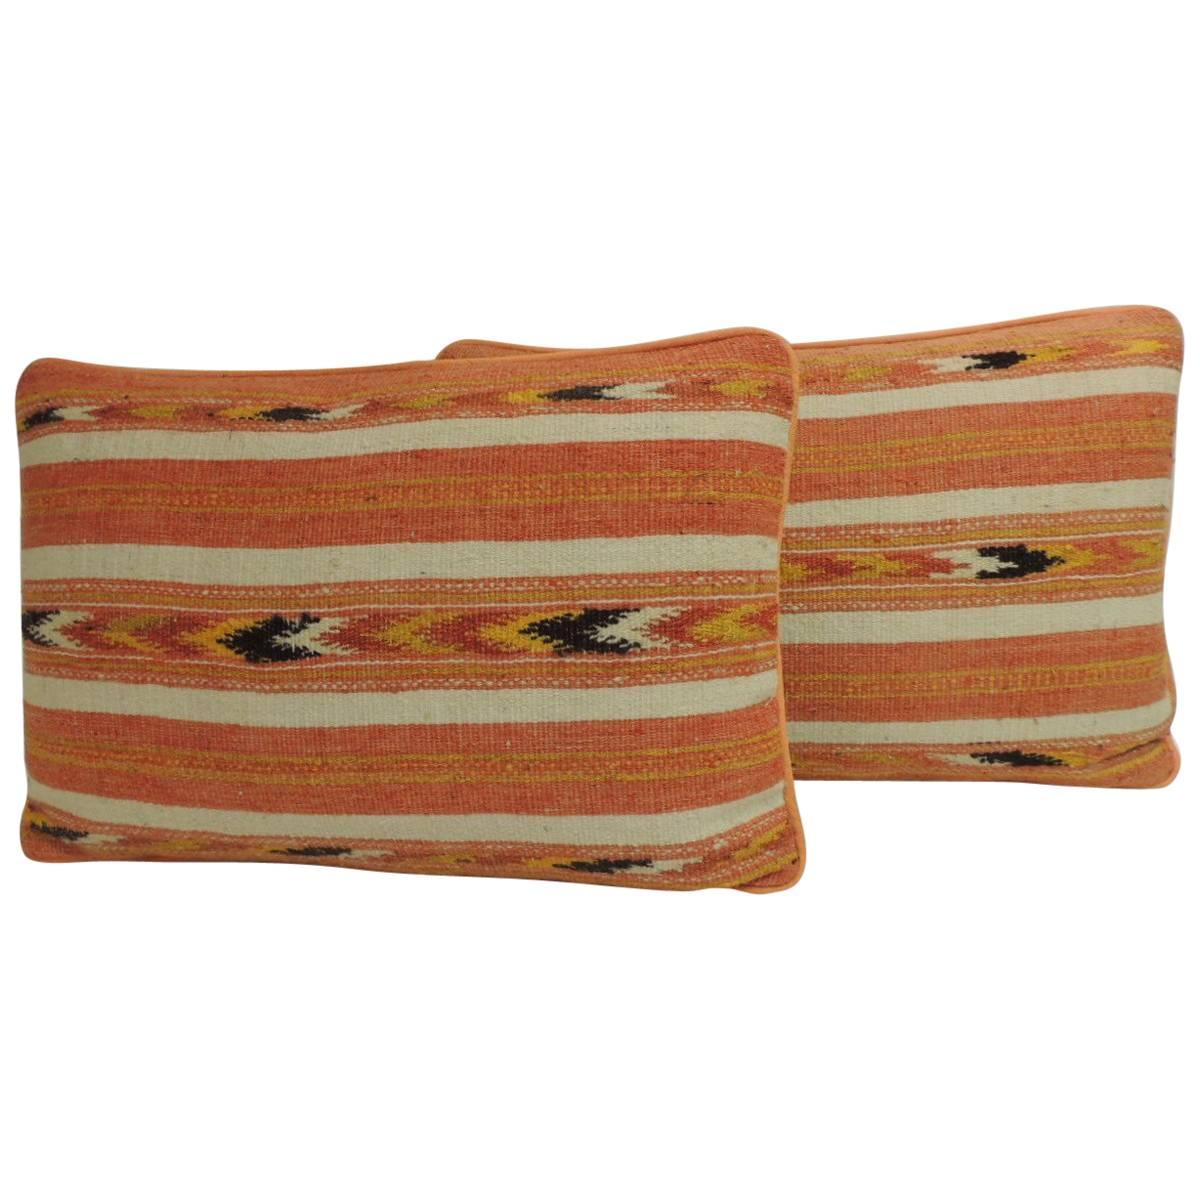 Pair of 19th Century Orange and Yellow Turkish Woven Lumbar Decorative Pillows